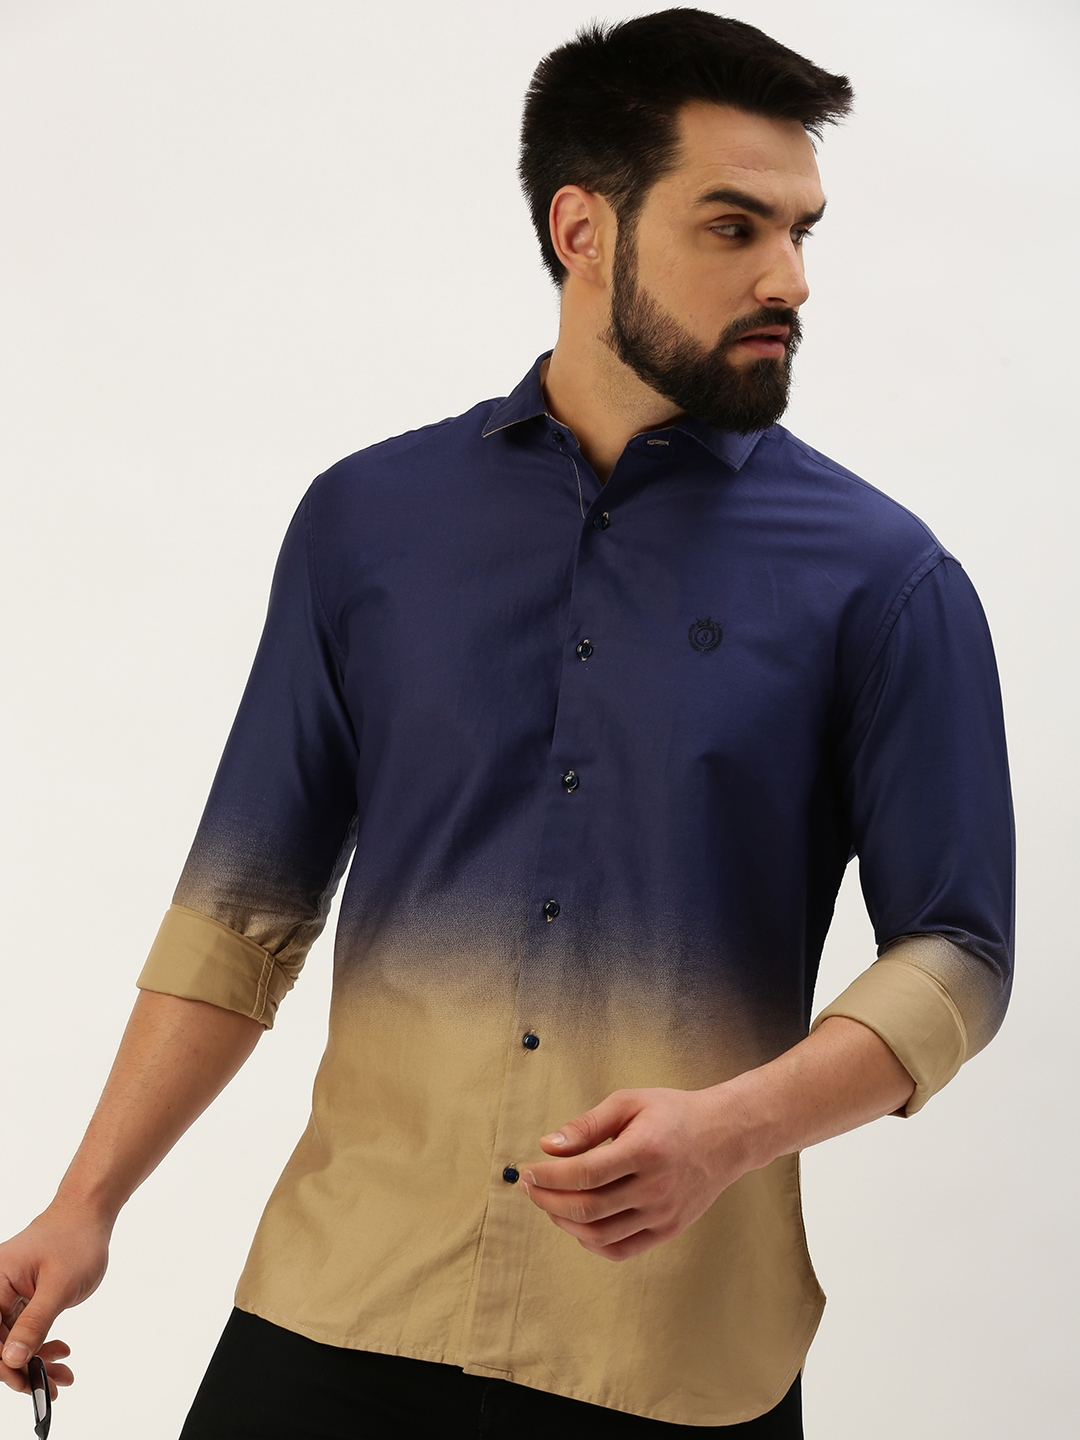 Showoff | SHOWOFF Men's Spread Collar Solid Navy Blue Regular Fit Shirt 0